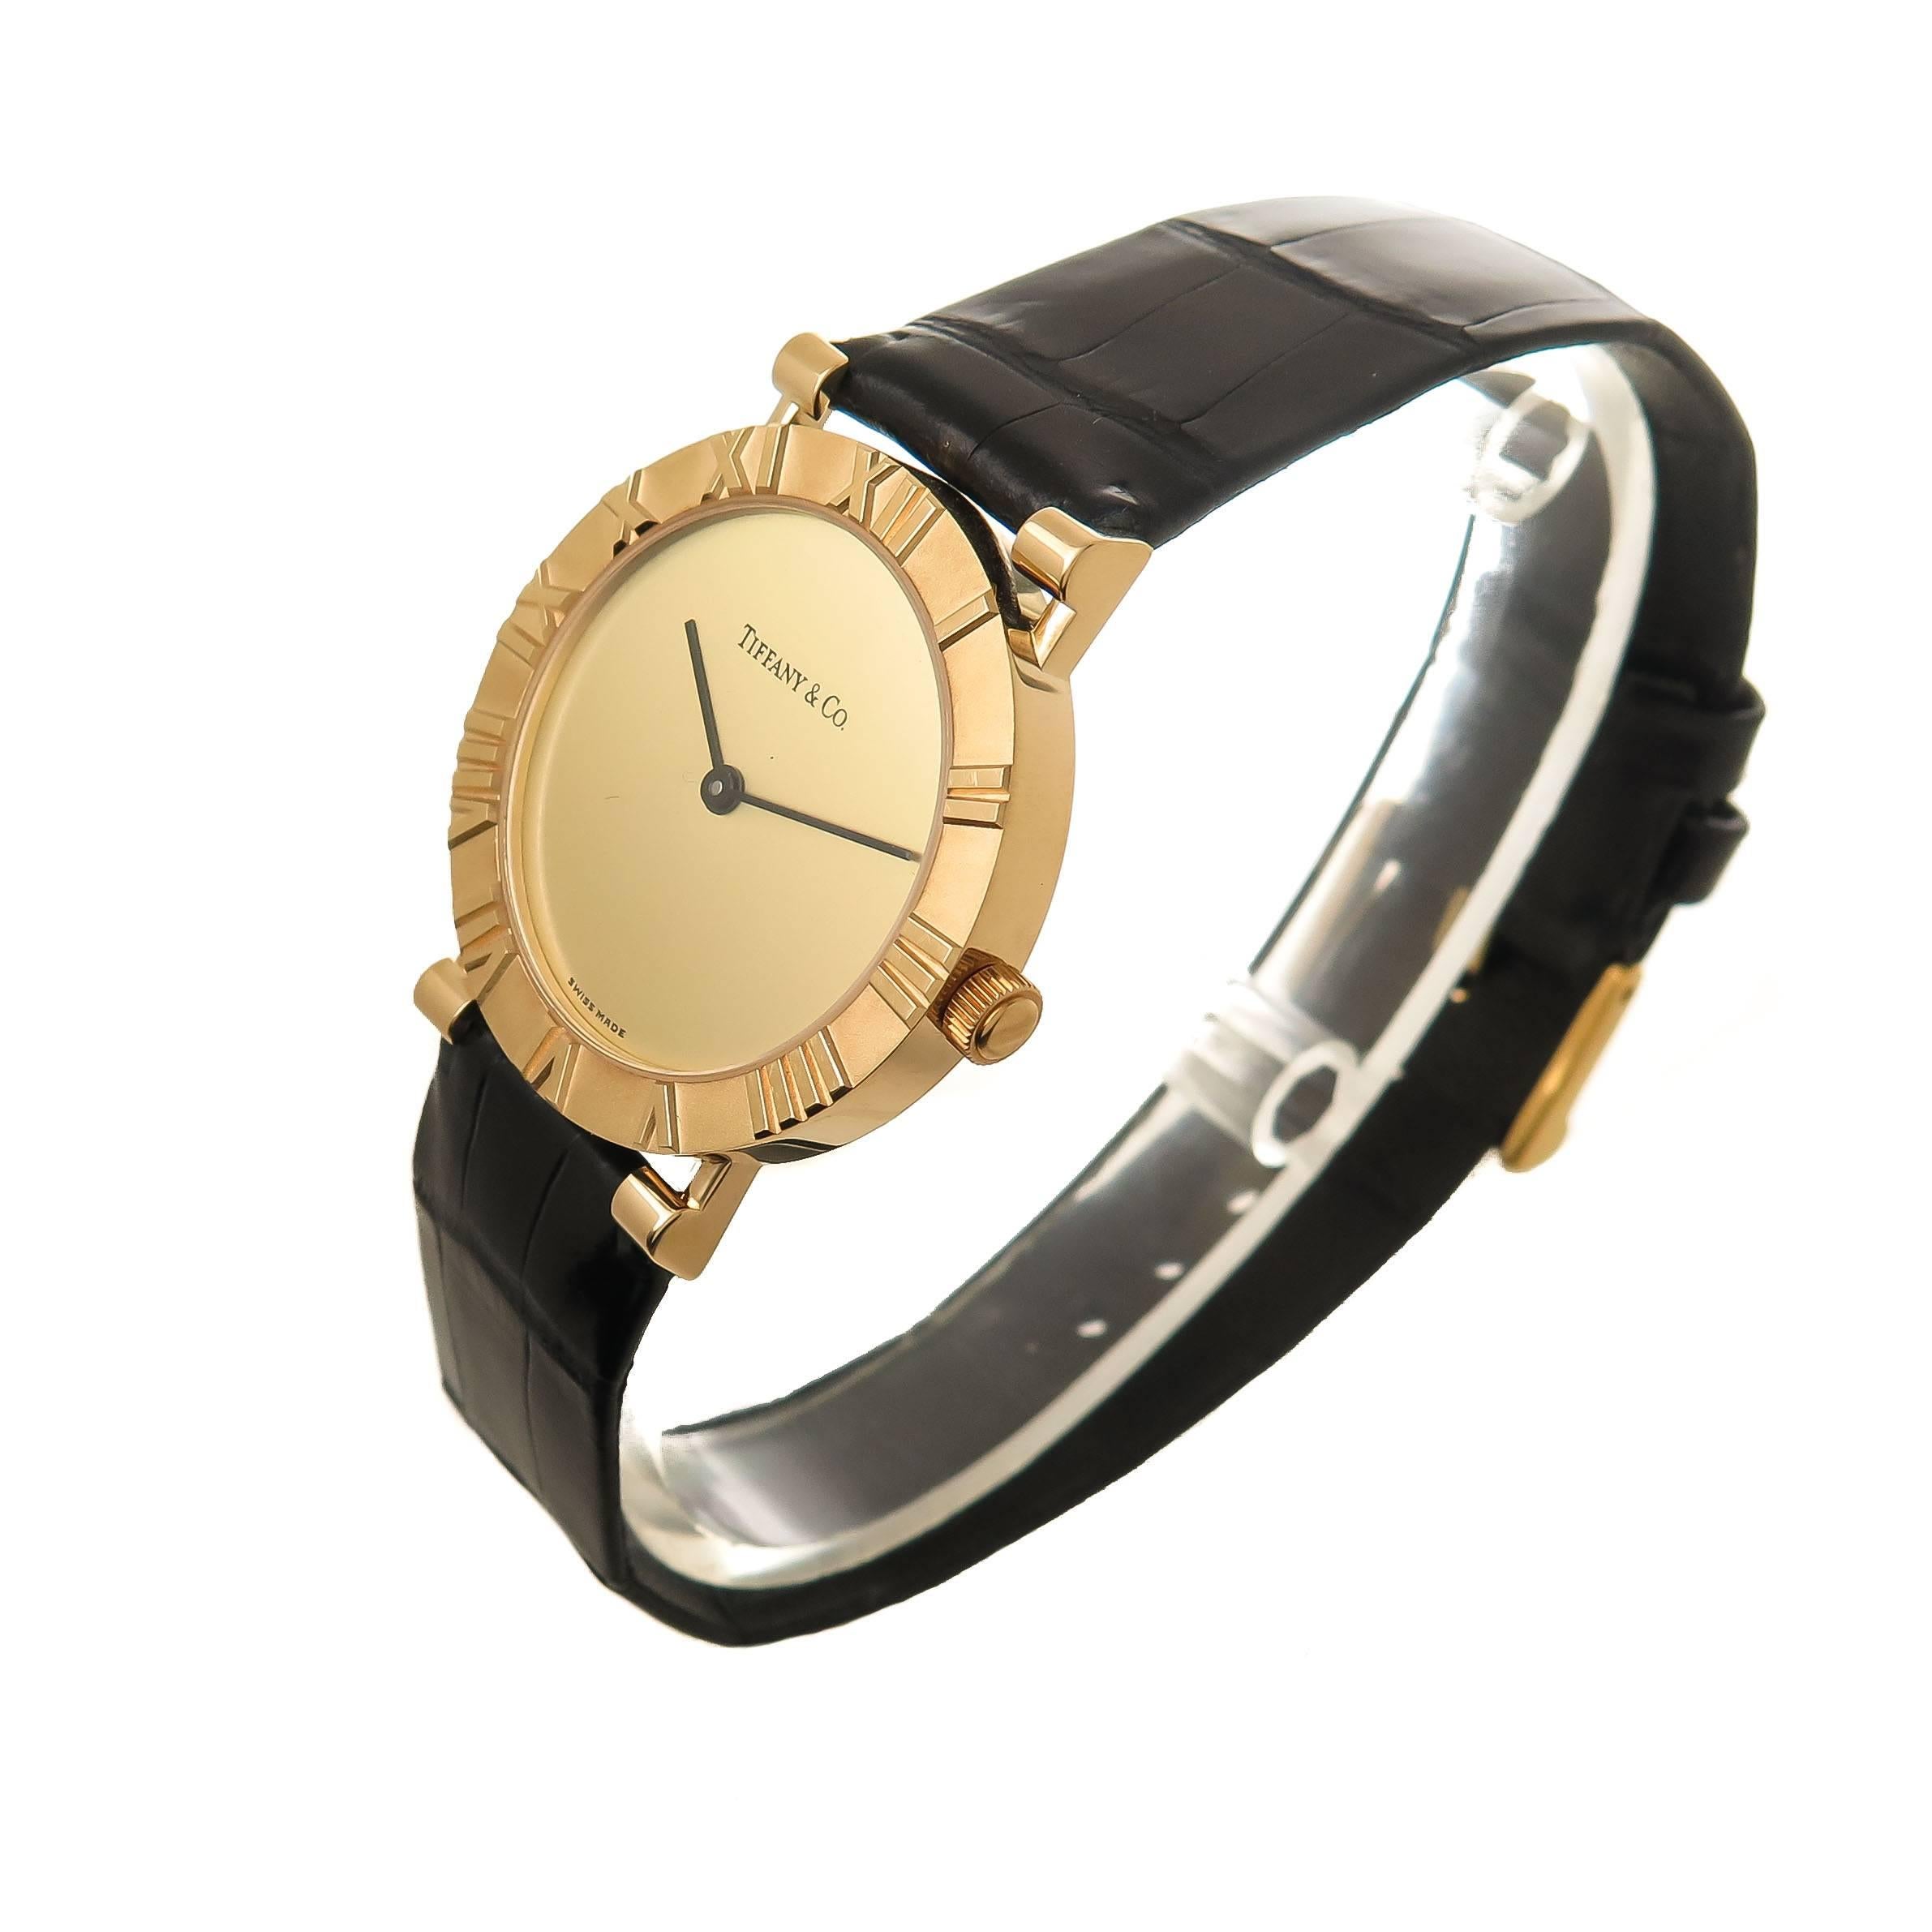 Circa 2000 Tiffany & Company Atlas Collection Wrist watch, 31 M.M. 18K Yellow Gold Water resistant case. Quartz Movement, Gold dial. Original Tiffany & Company Black Alligator strap with Tiffany Buckle, watch length 9 1/4 inches.. Original Tiffany